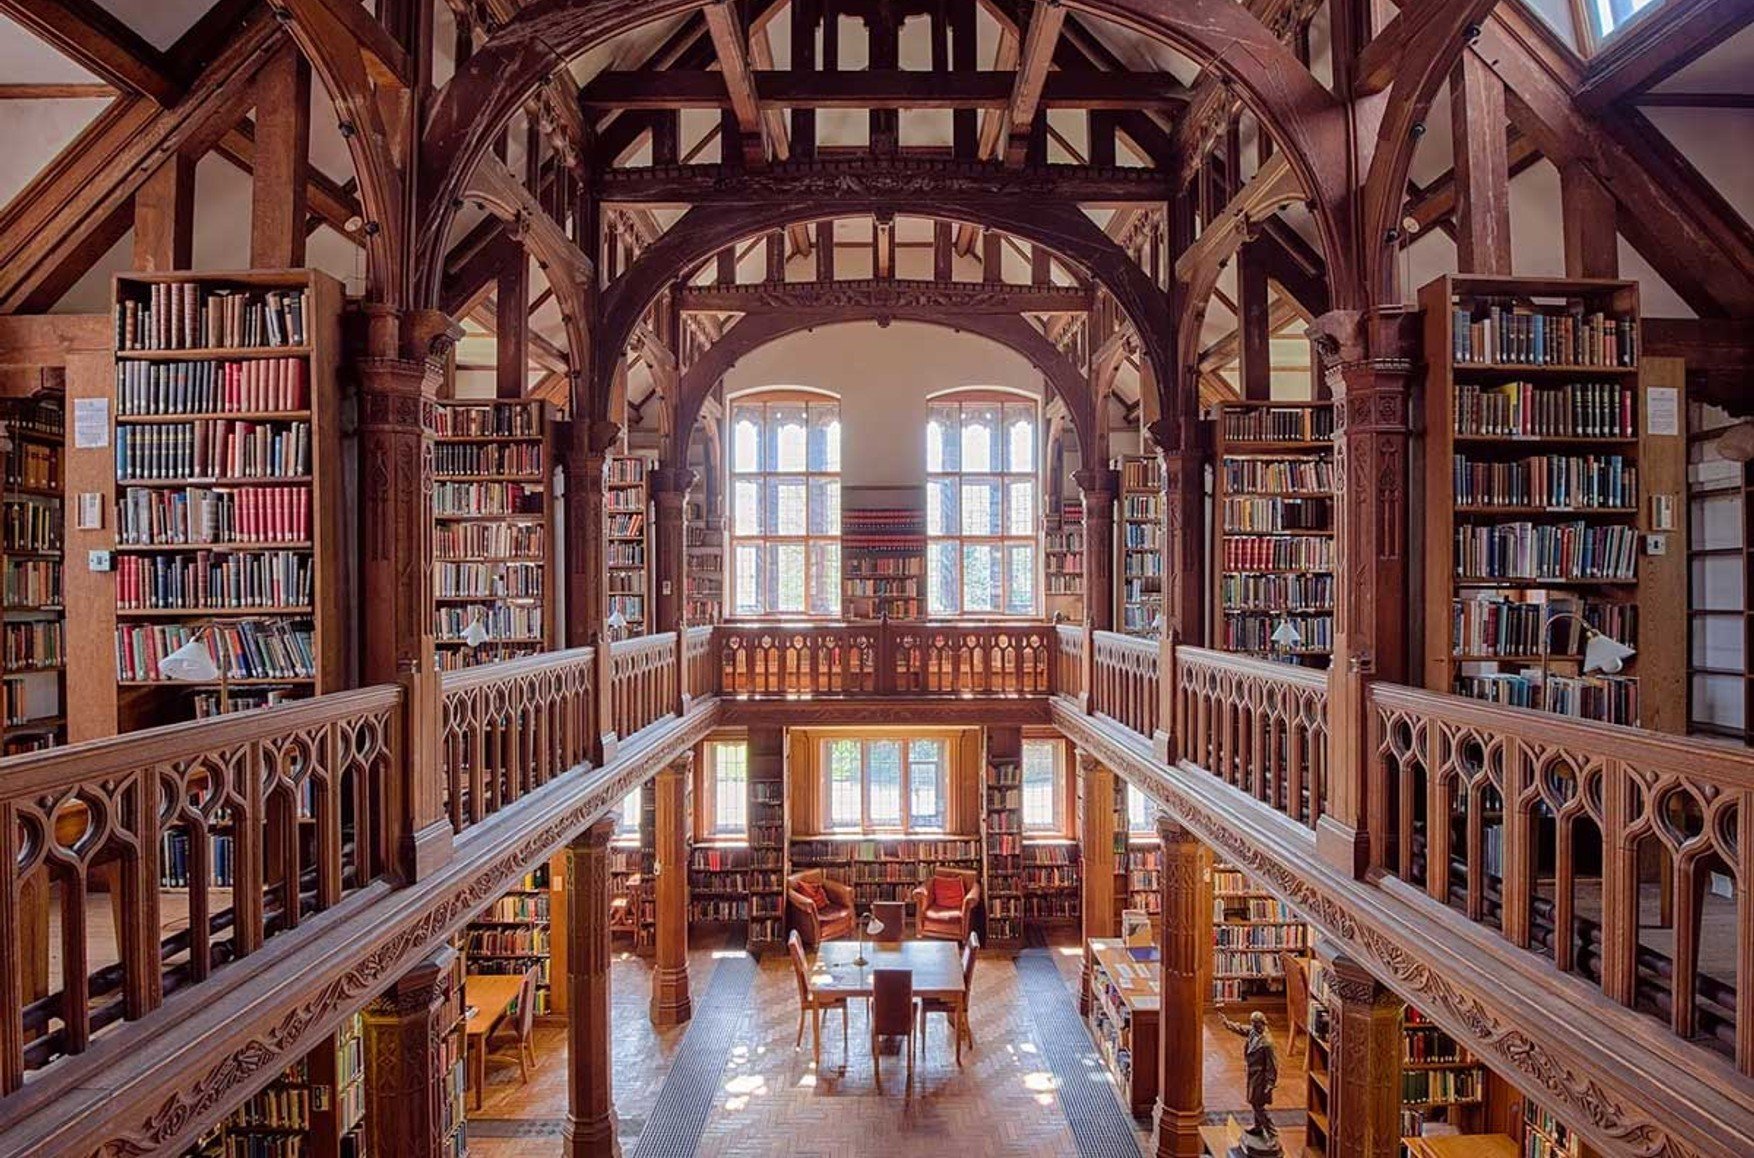 Library rld. Библиотека Кембриджского университета. Кембридж университет библиотека. Кембриджский университет внутри библиотека. Библиотека Кембриджа Университетская.